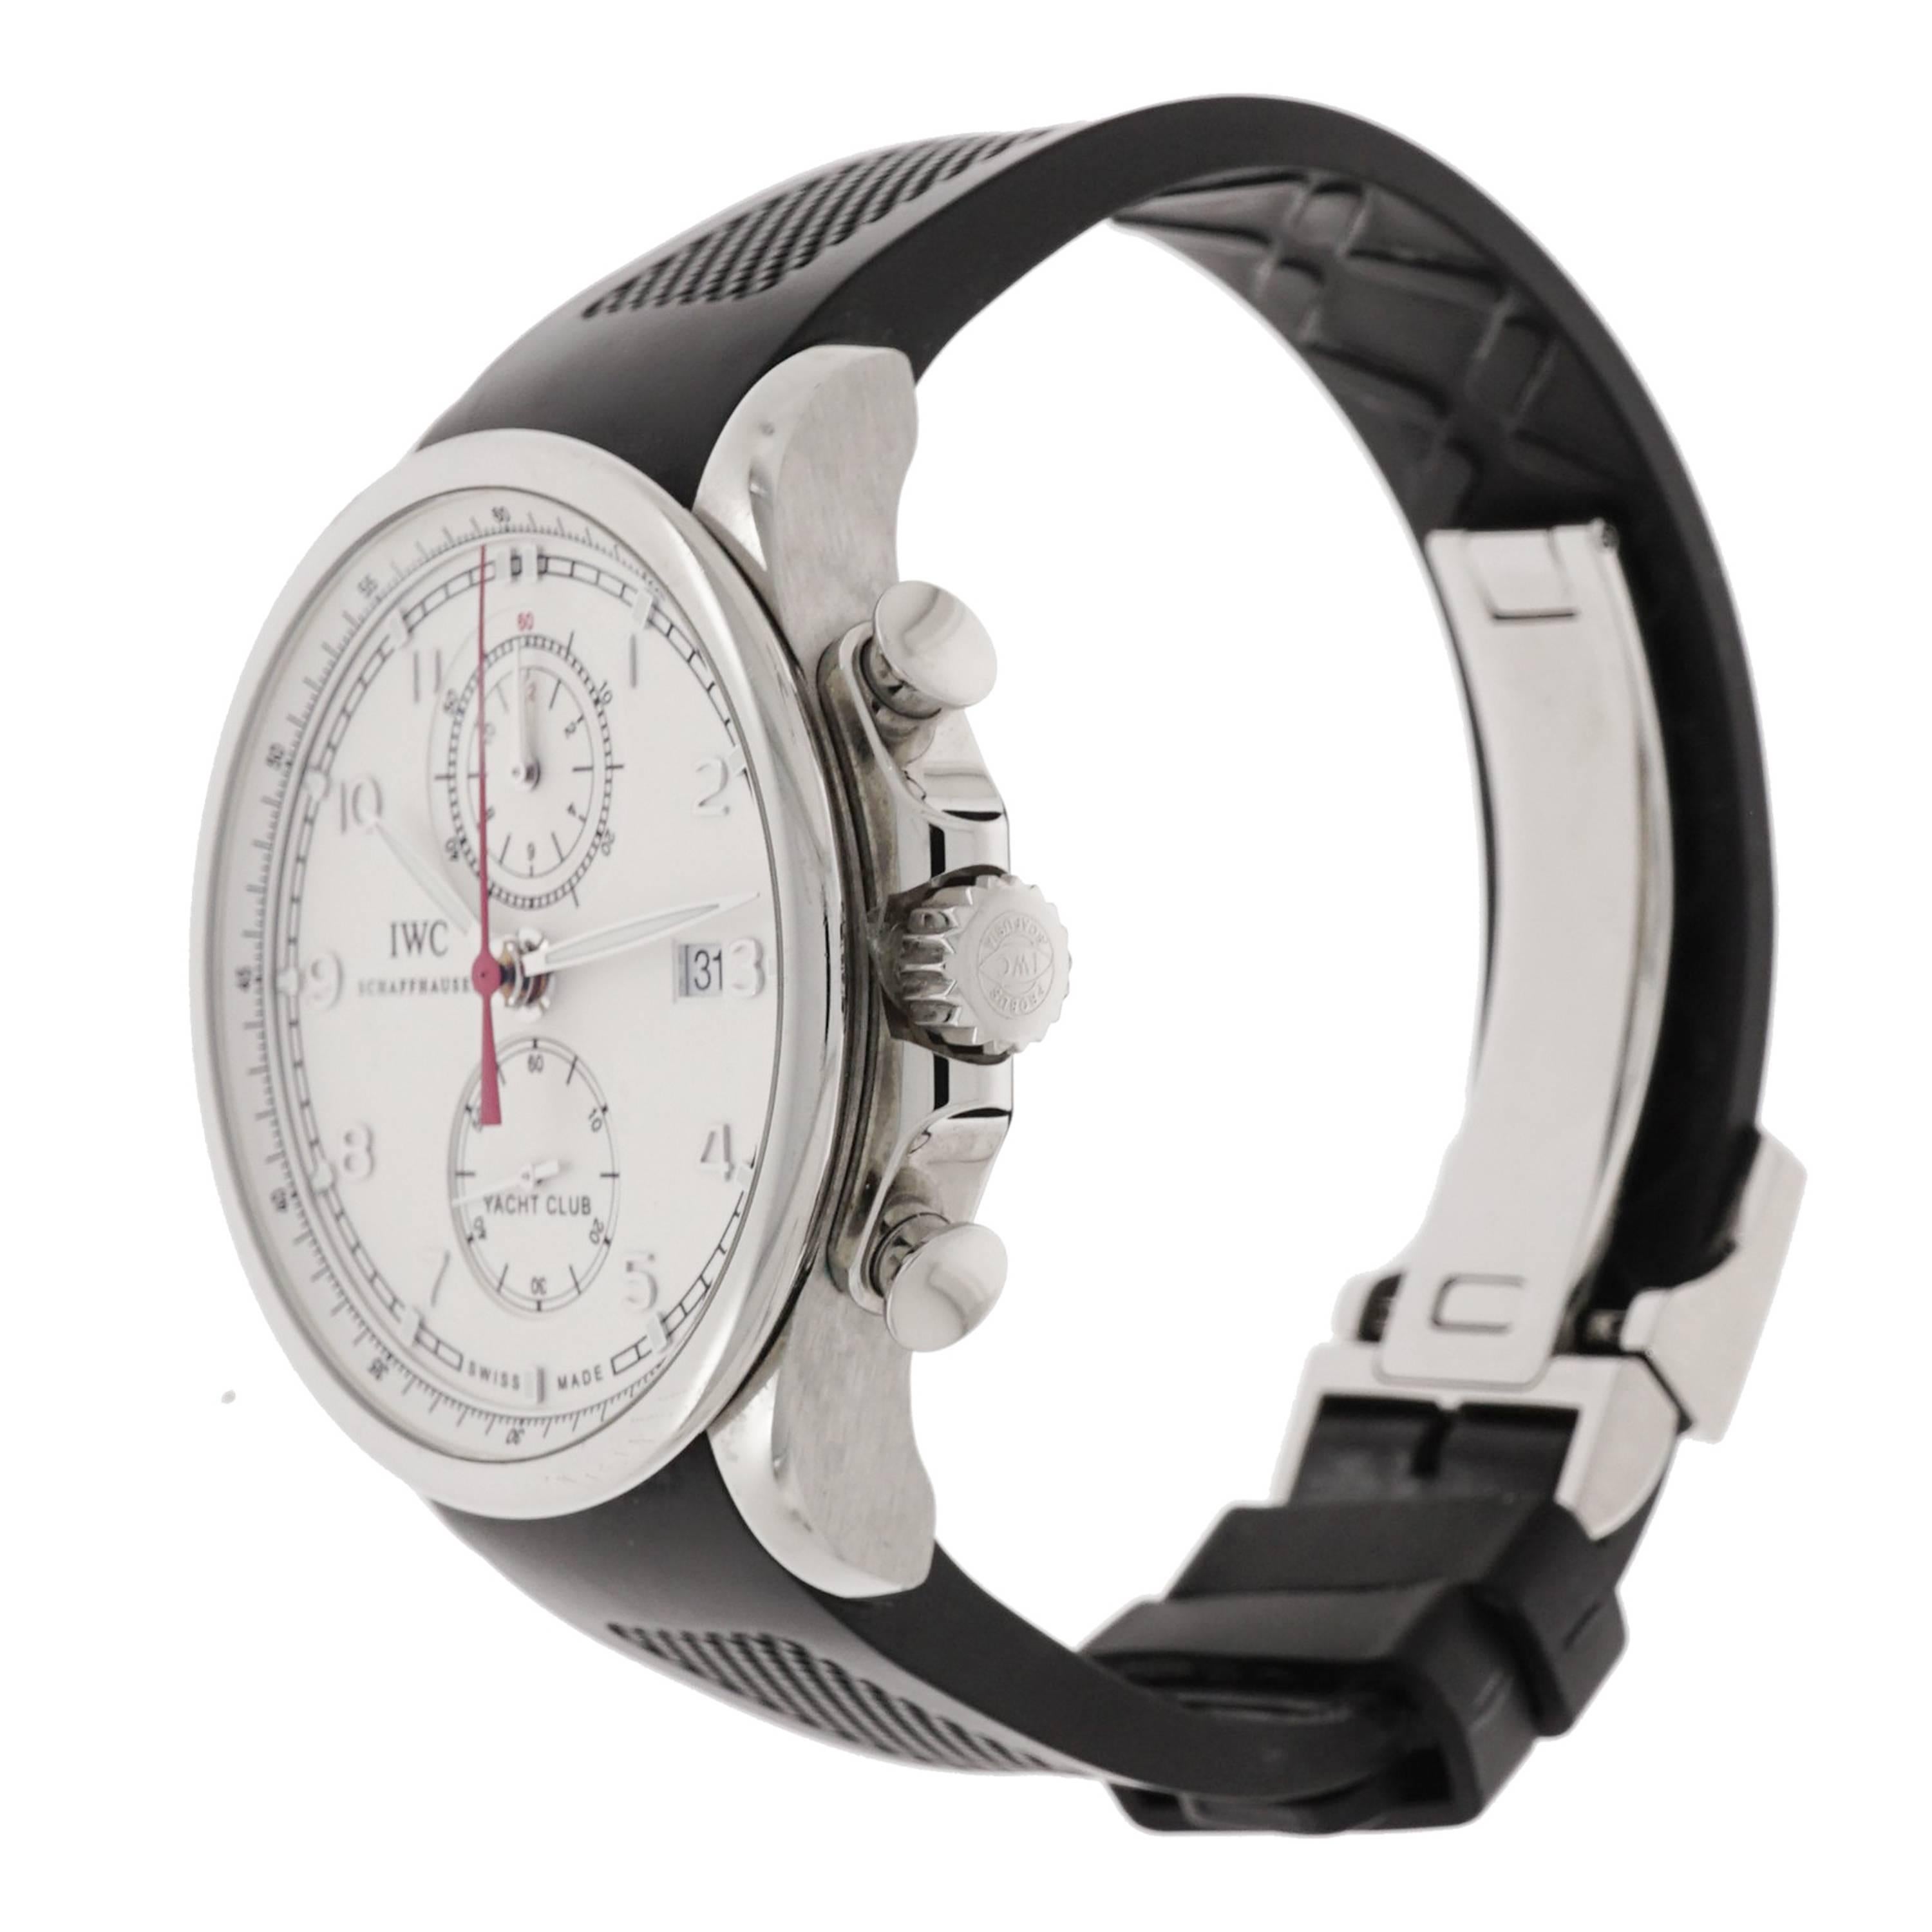 Modern IWC Stainless Steel Yacht Club Chronograph self-winding Wristwatch